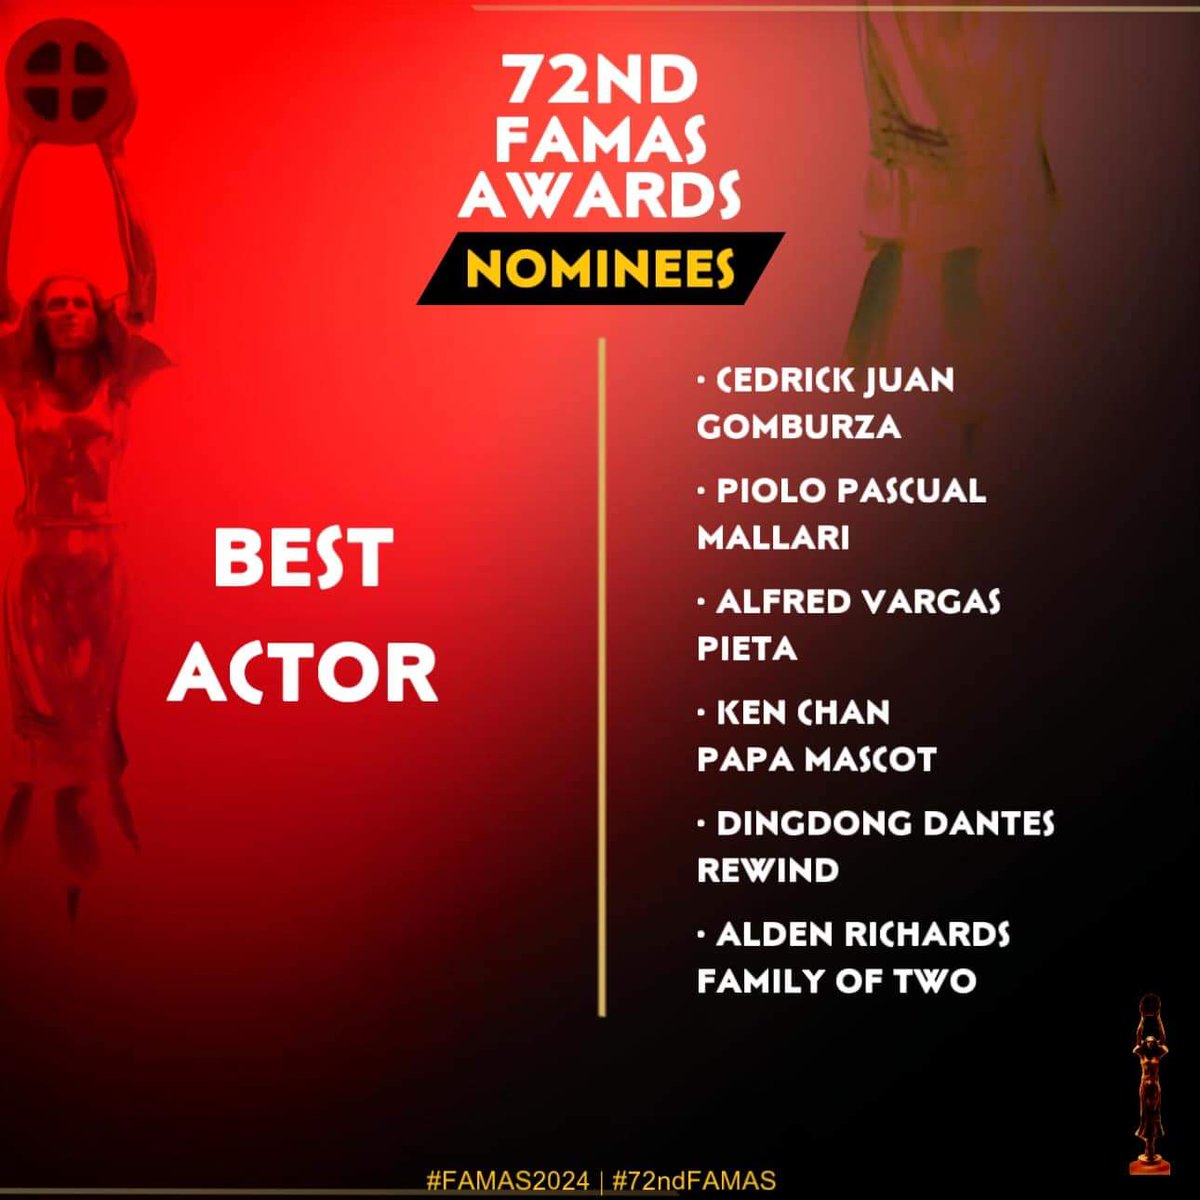 Congratulations, @aldenrichards02 for your Best Actor nomination for Family Of Two. #ALDENRichards #SharonCuneta #FAMAS #FamilyOfTwo #KathrynBernardo #JuliaMontes #NadineLustre #DonBelle #BINI